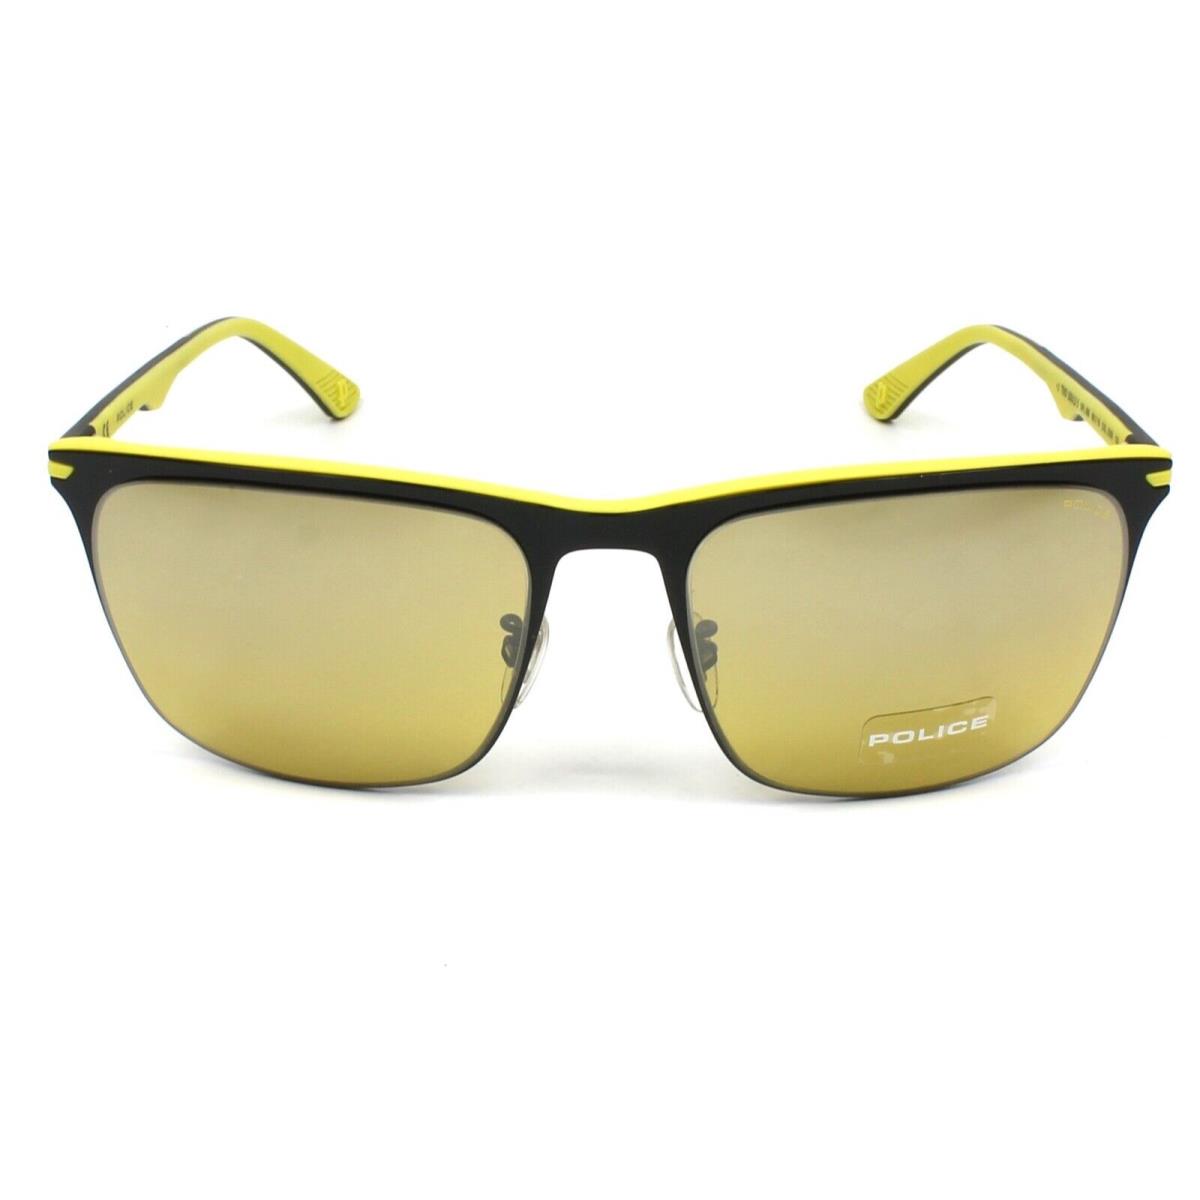 Police Sunglasses SPL580 530X 58-18-135 Shiny Black Yellow Frame